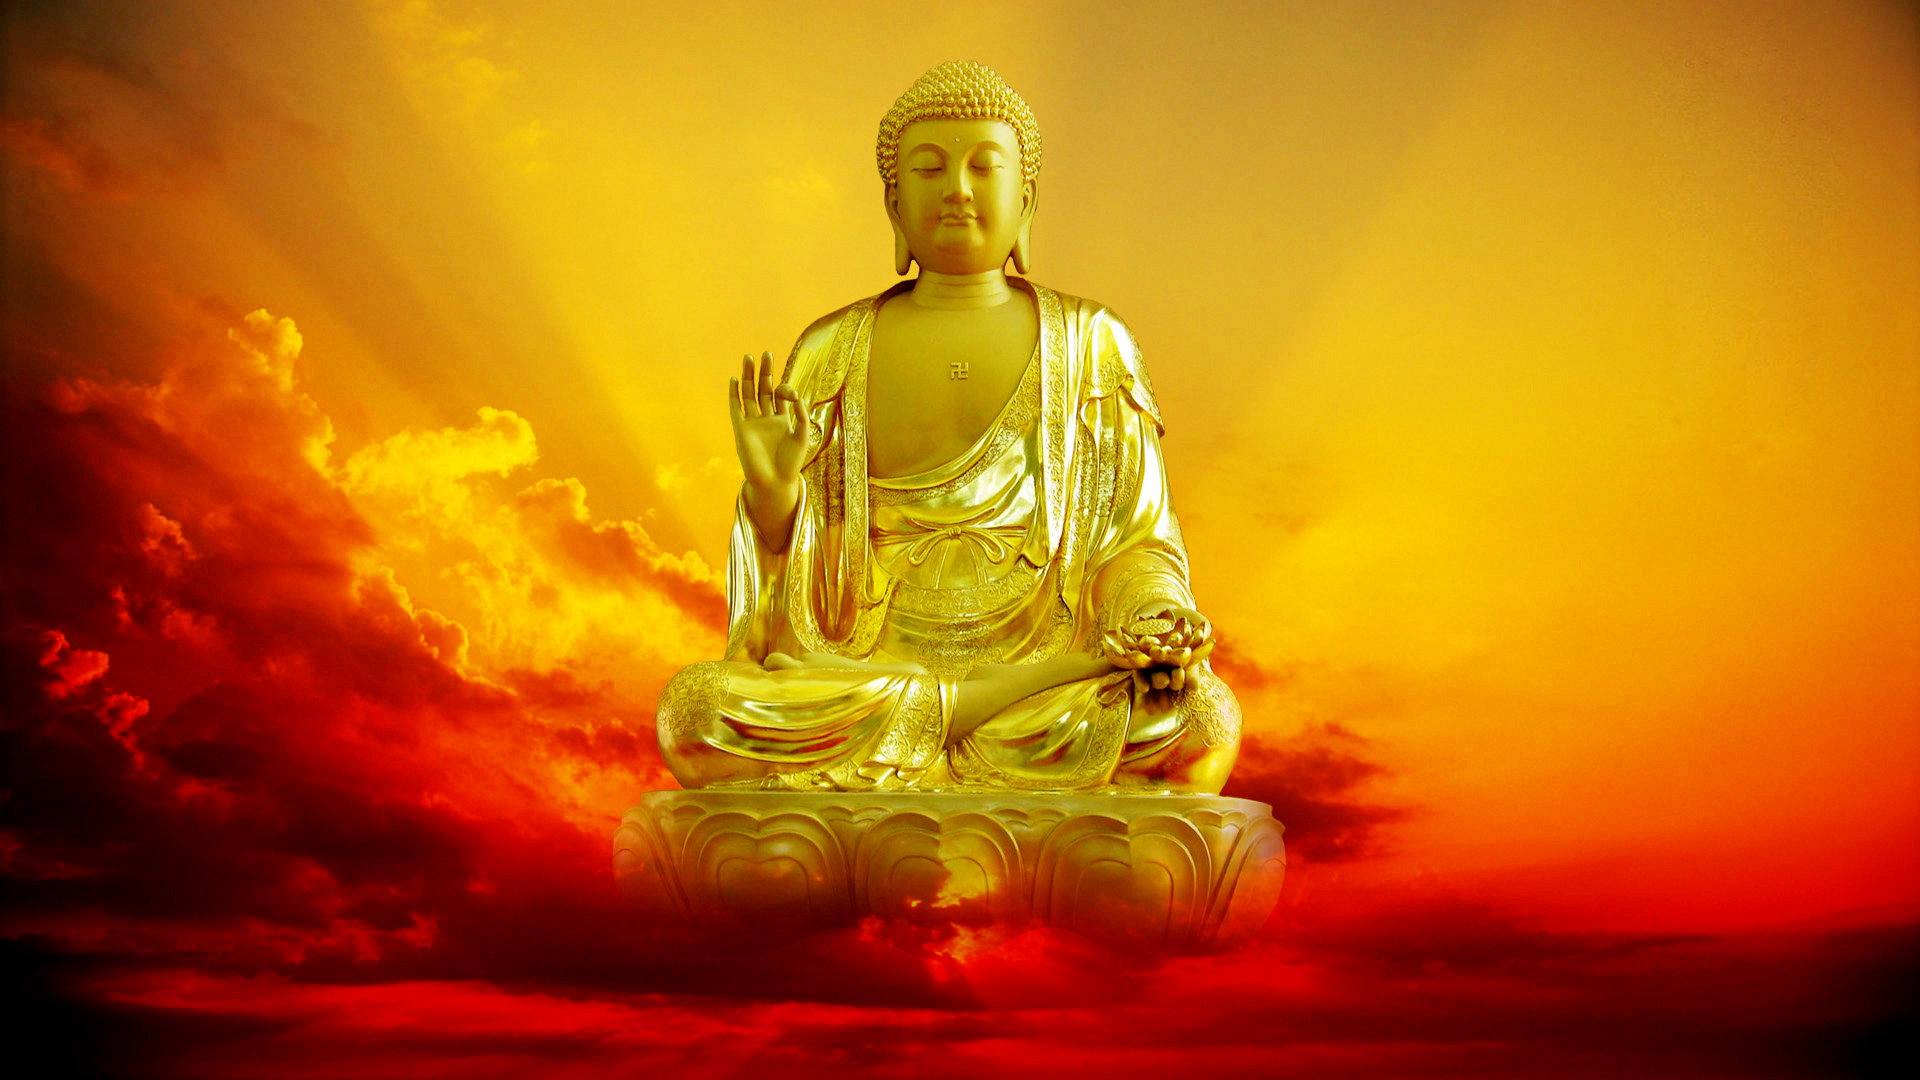 Buddha Hd Wallpaper 1080p Download | Hindu Gods and Goddesses